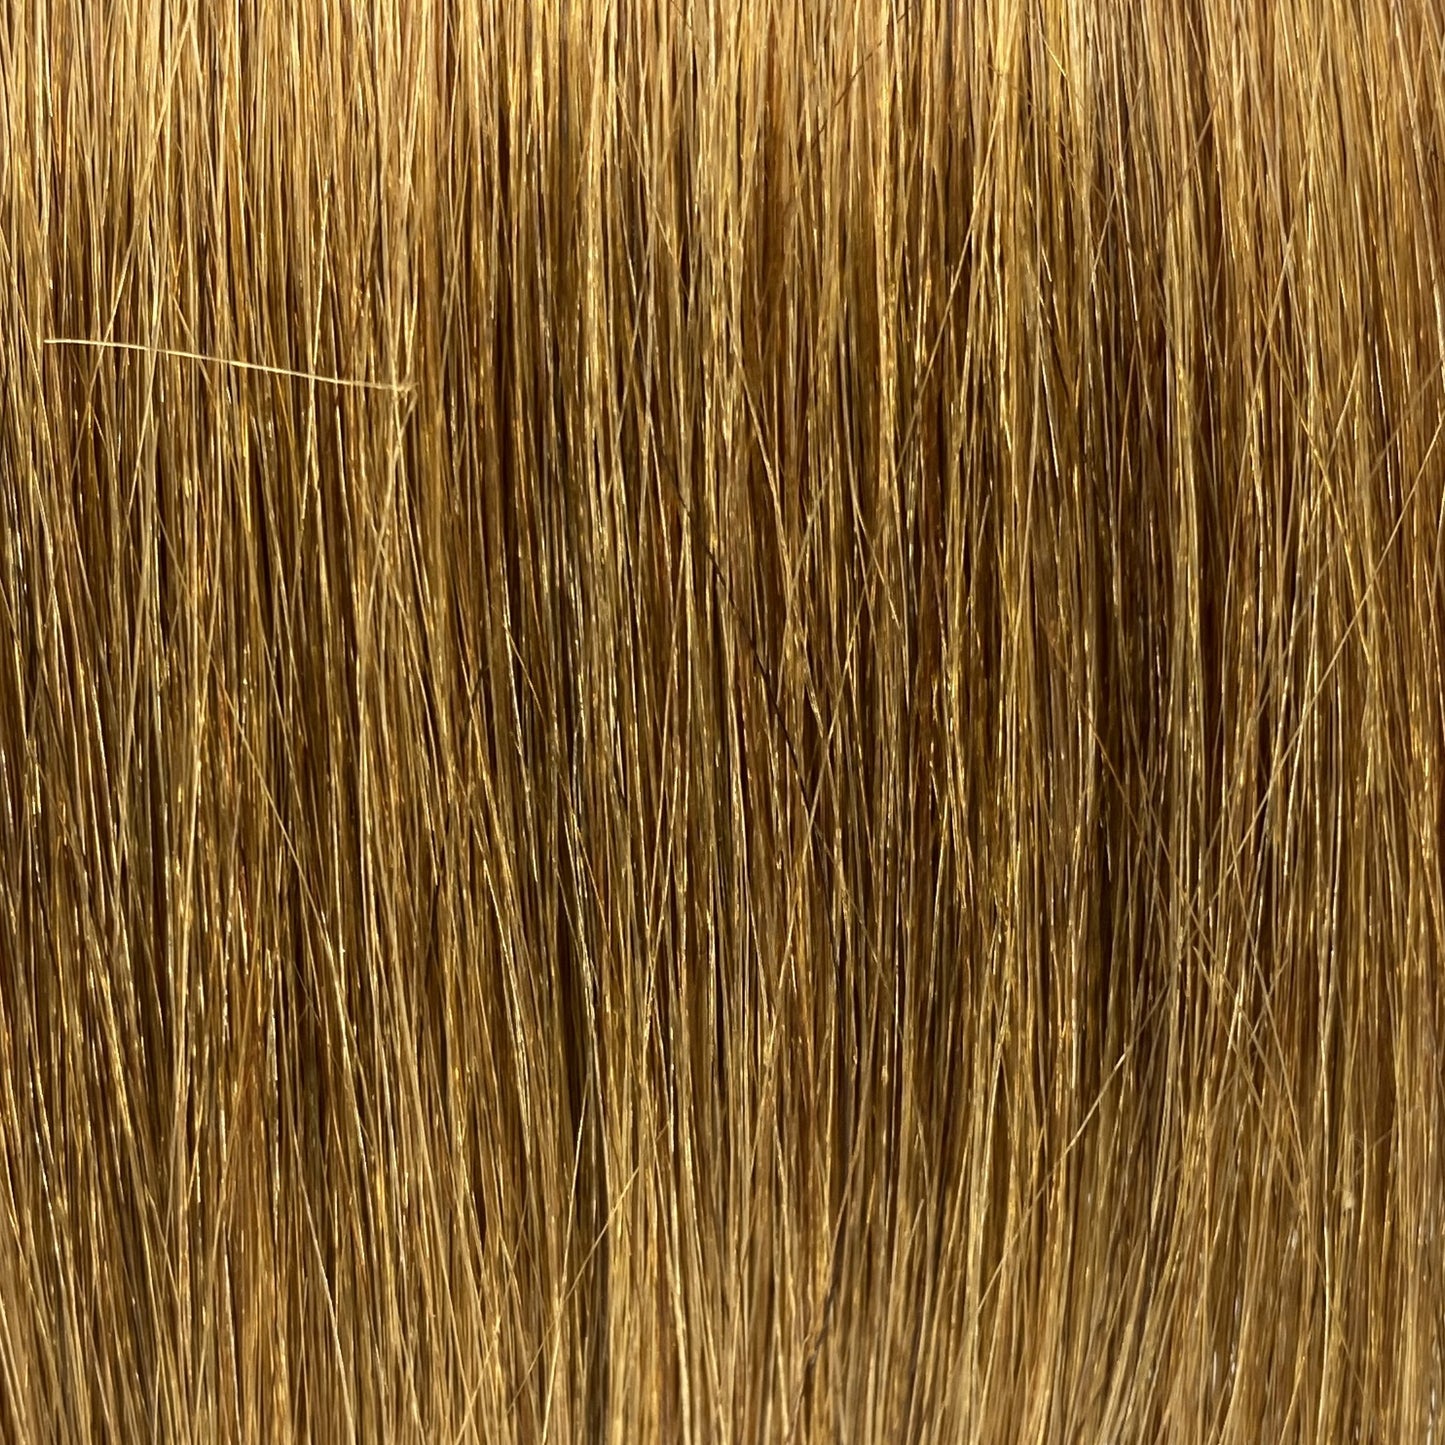 Fusion hair extensions #14 - 50cm/20 inches - Copper Golden Light Blonde Fusion Euro So Cap 